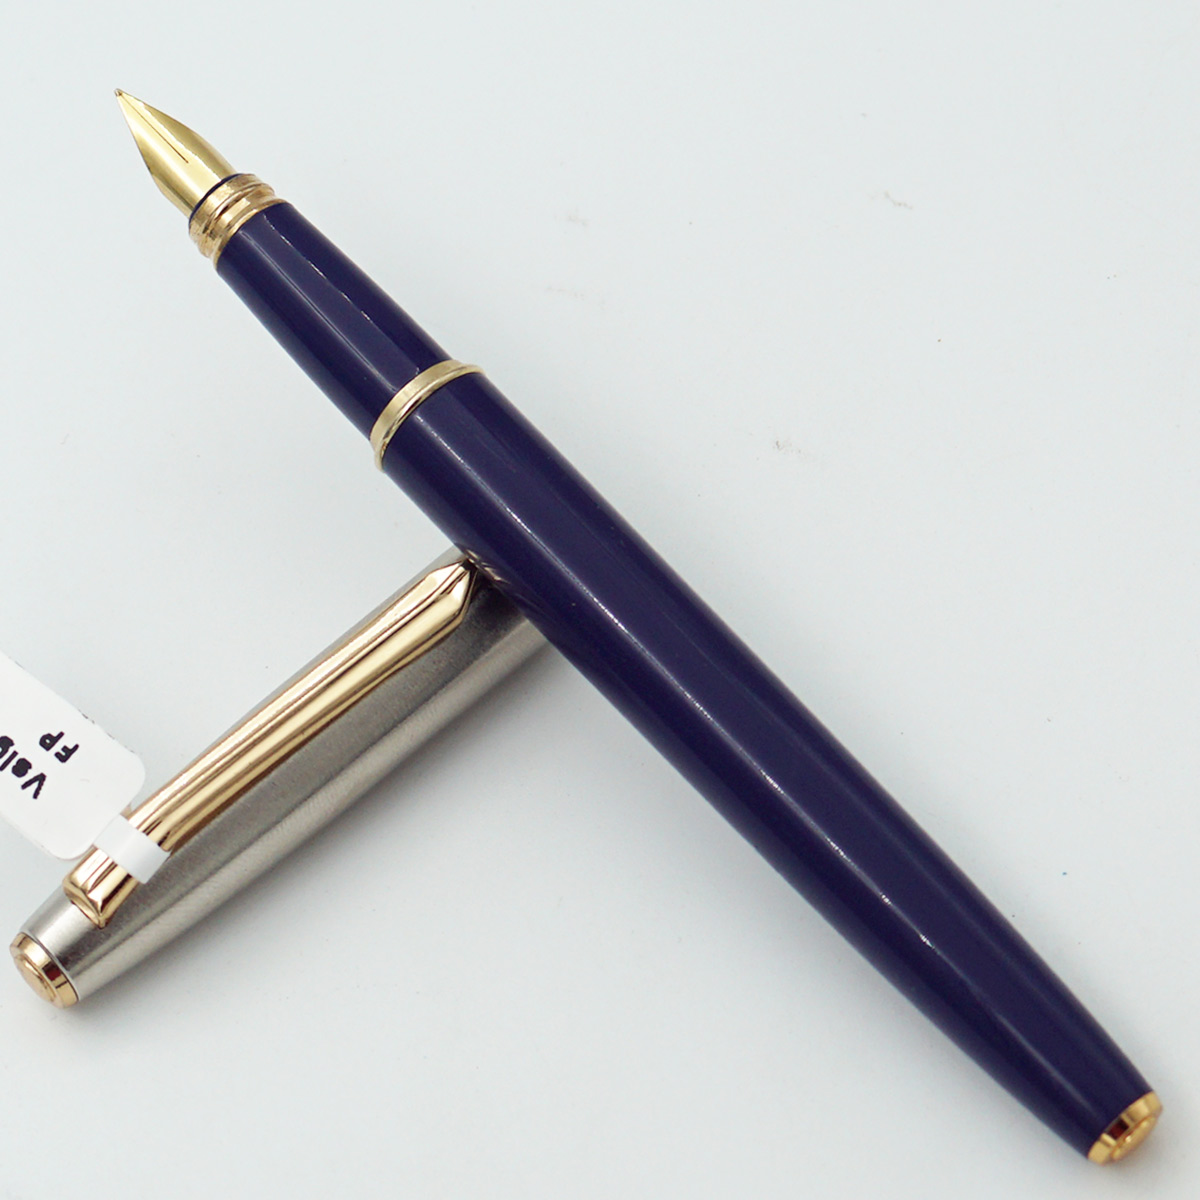 Vsign Stride Blue Color Body With Golden Color Clip Fine Nib Eye Dropper Model Fountain Pen(3 in 1) SKU 24470